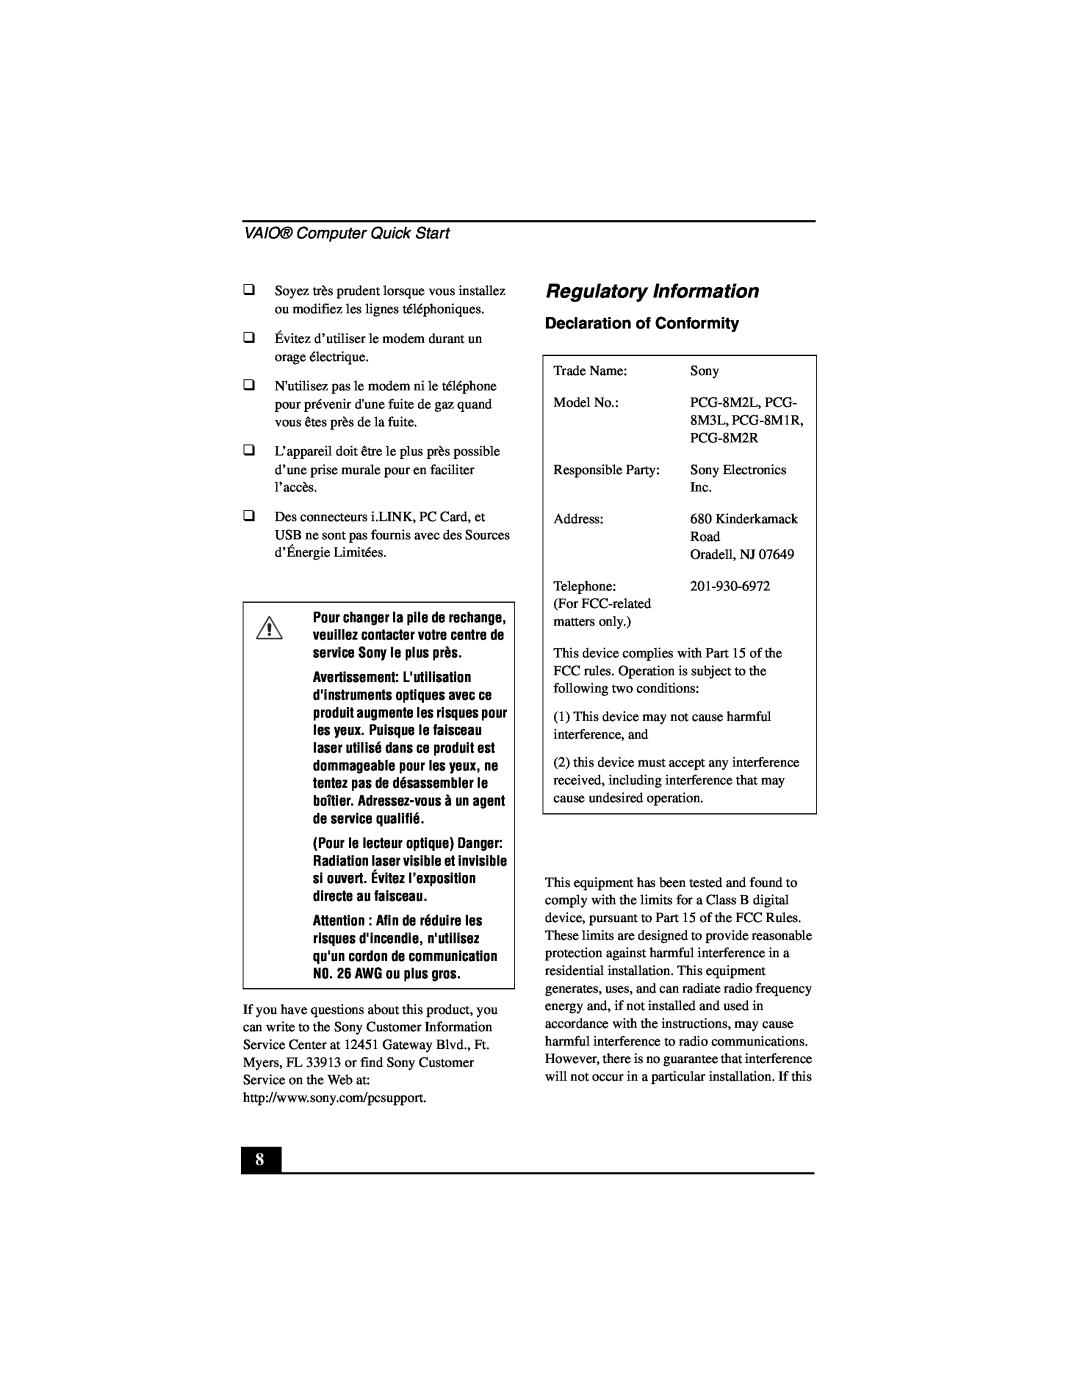 Sony PCG-GRT100 quick start Regulatory Information, VAIO Computer Quick Start, Declaration of Conformity 